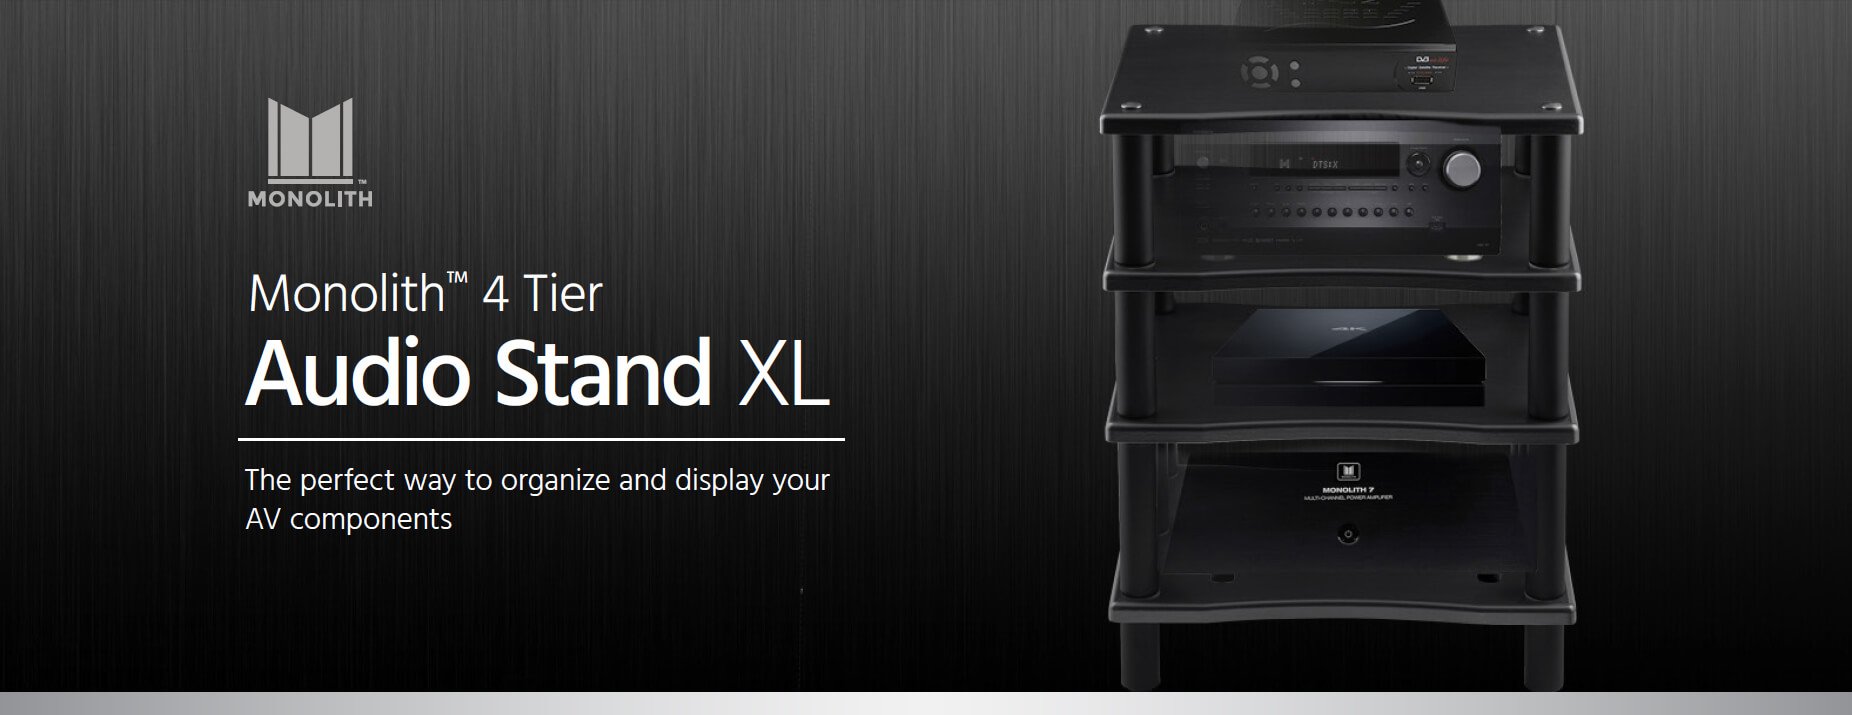 Black Monoprice Monolith 4 Tier Audio Stand XL